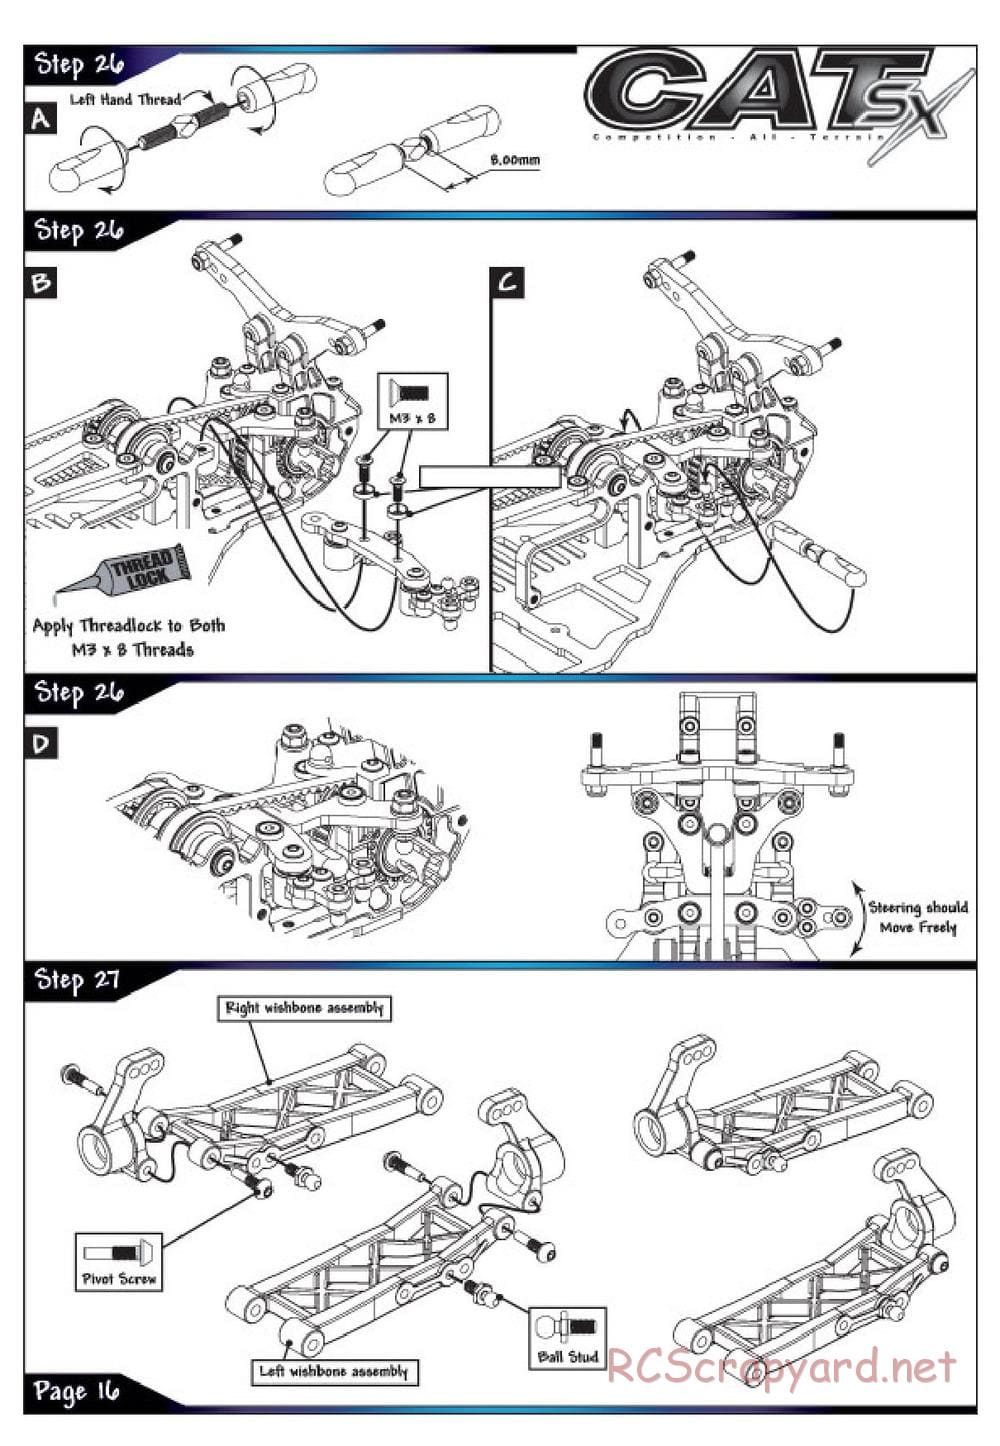 Schumacher - Cat SX - Manual - Page 9